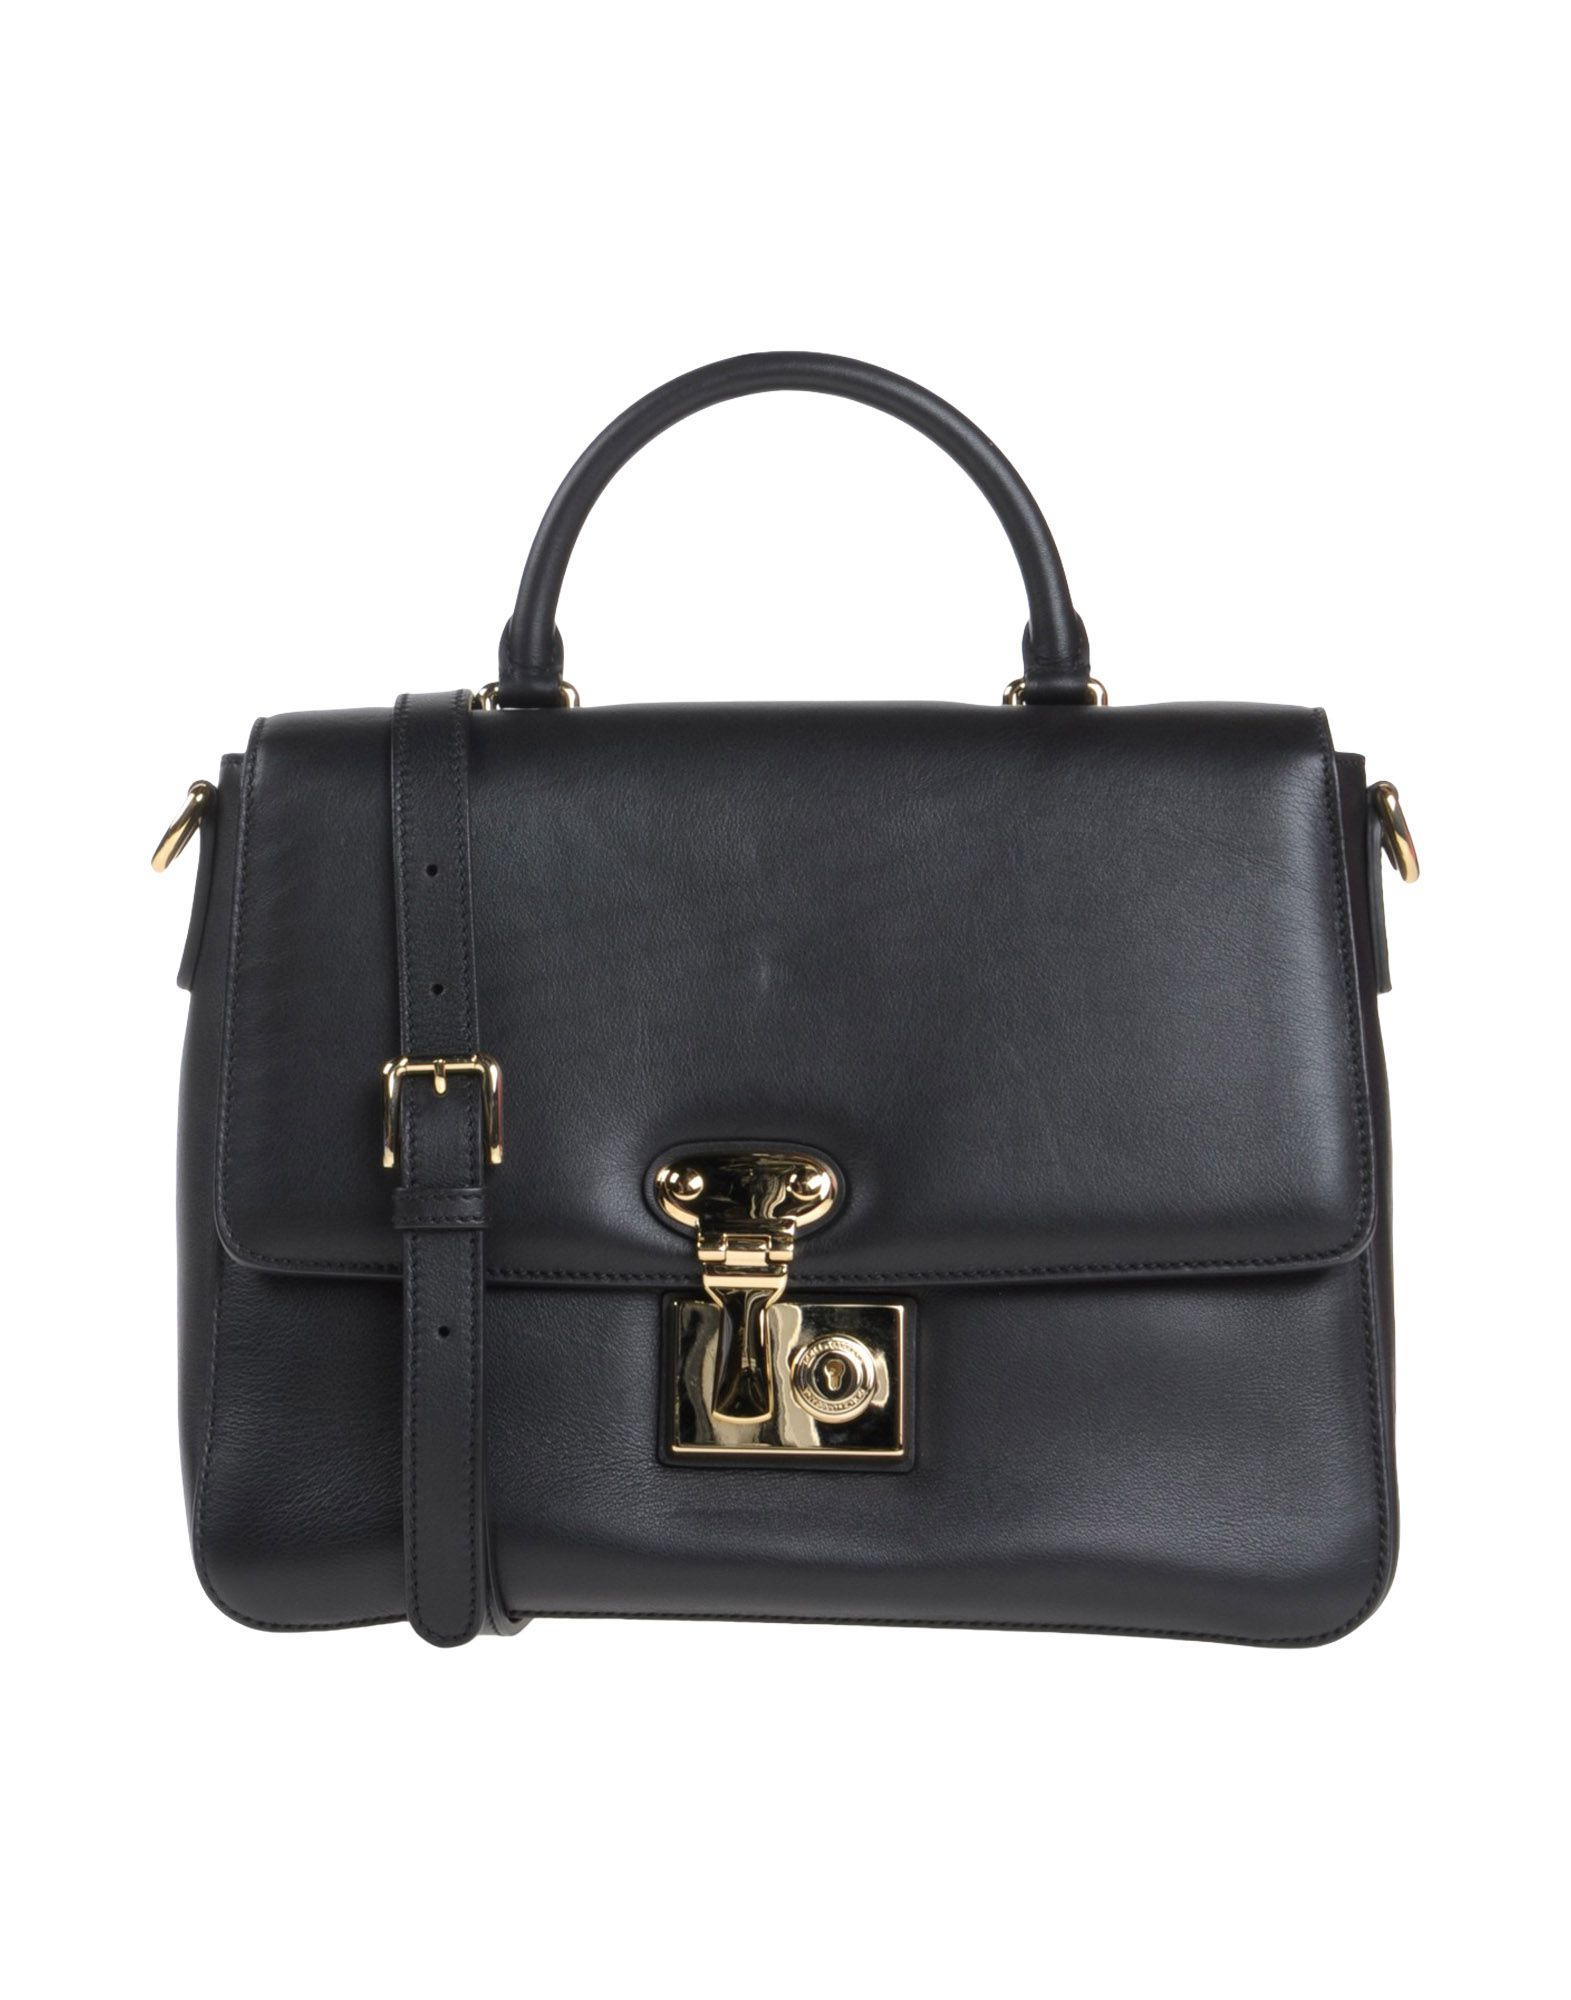 Dolce & gabbana Handbag in Black | Lyst